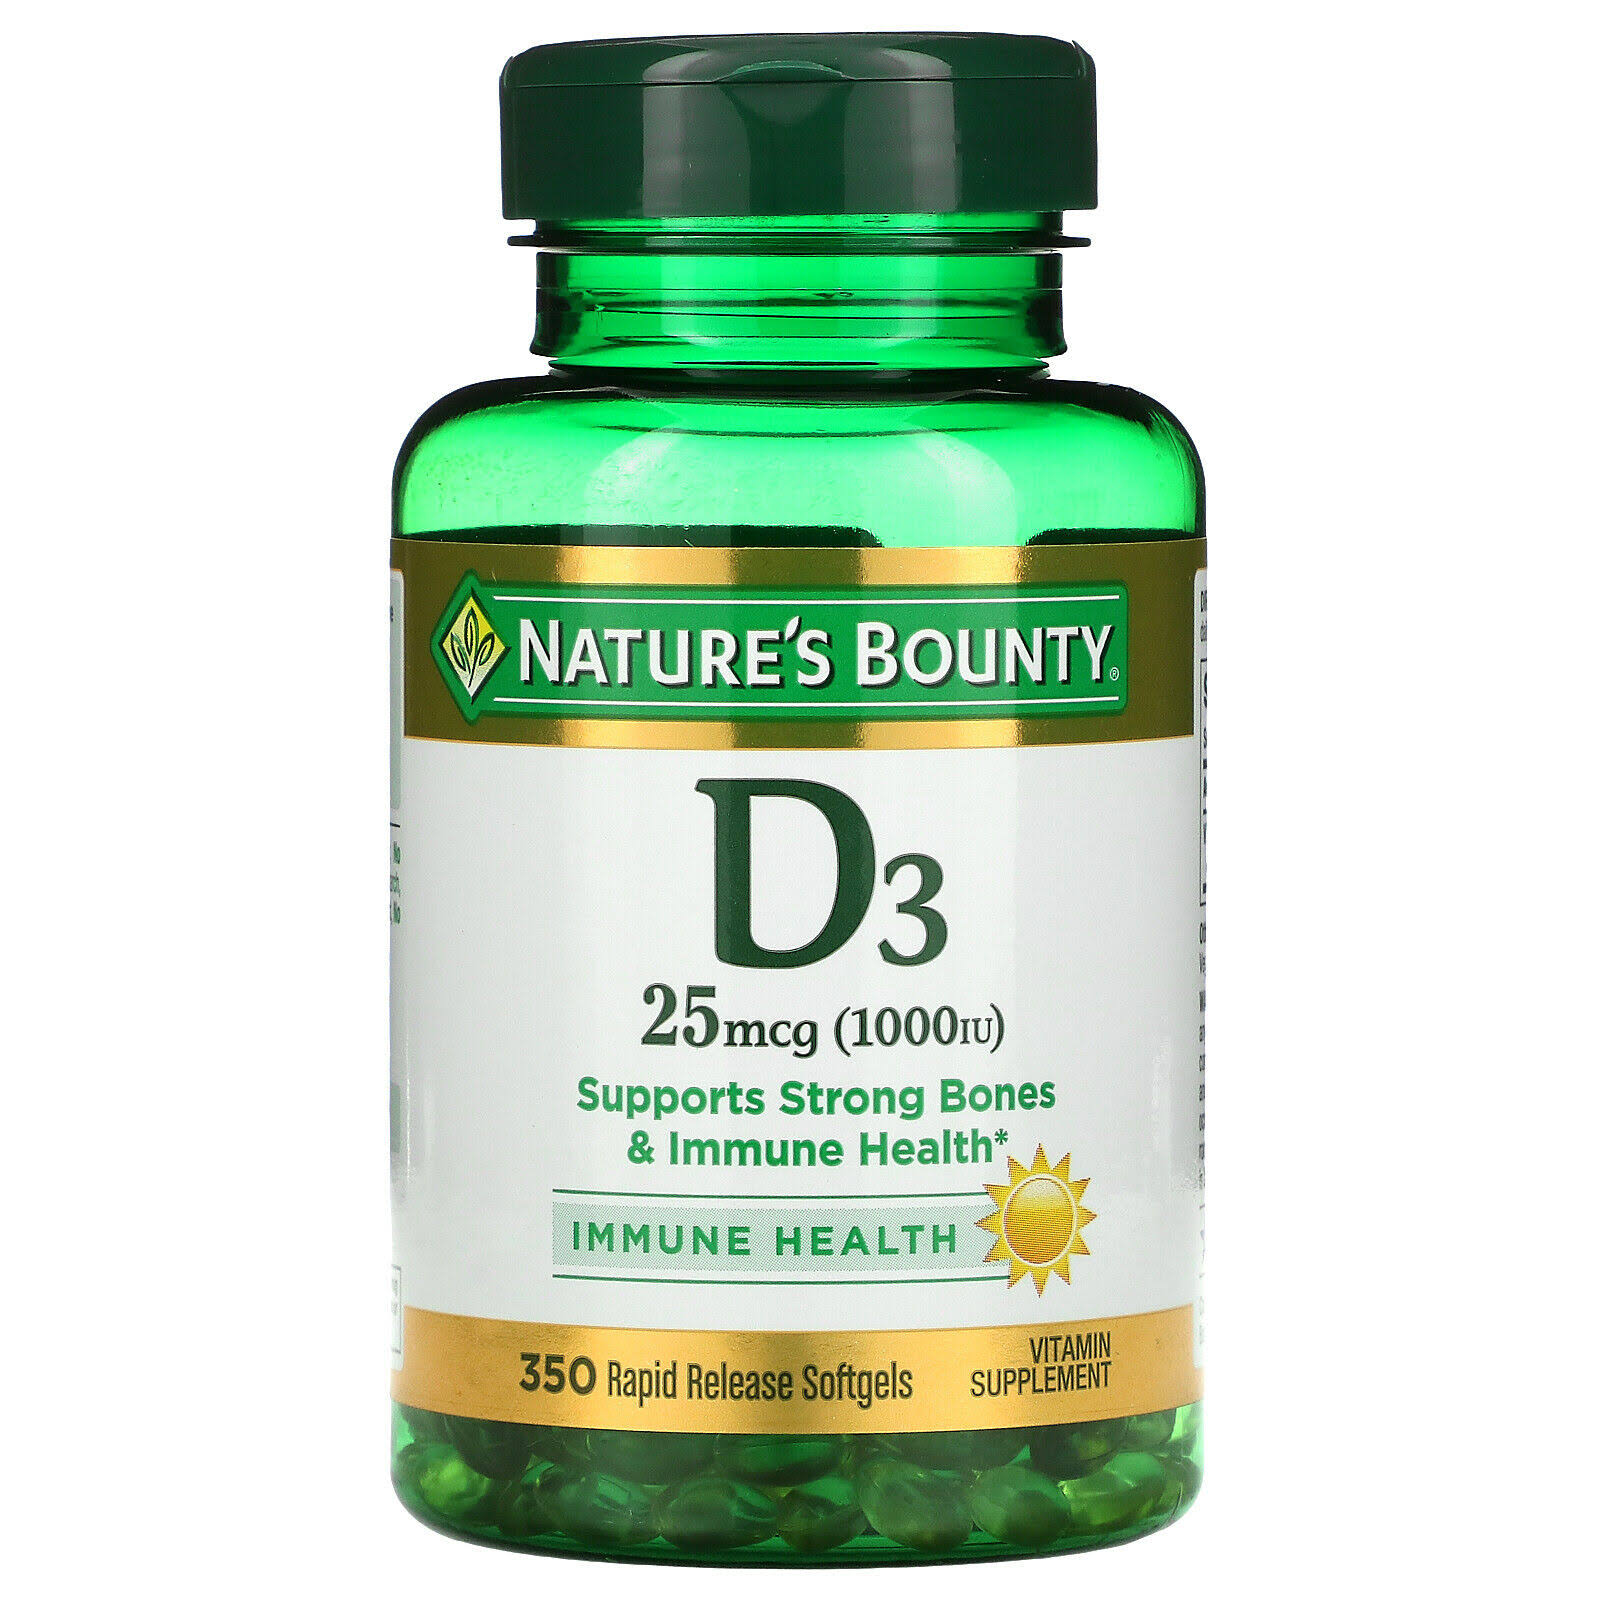 Nature's Bounty D3 1000 IU Vitamin Supplement - 350 Rapid Release Softgels